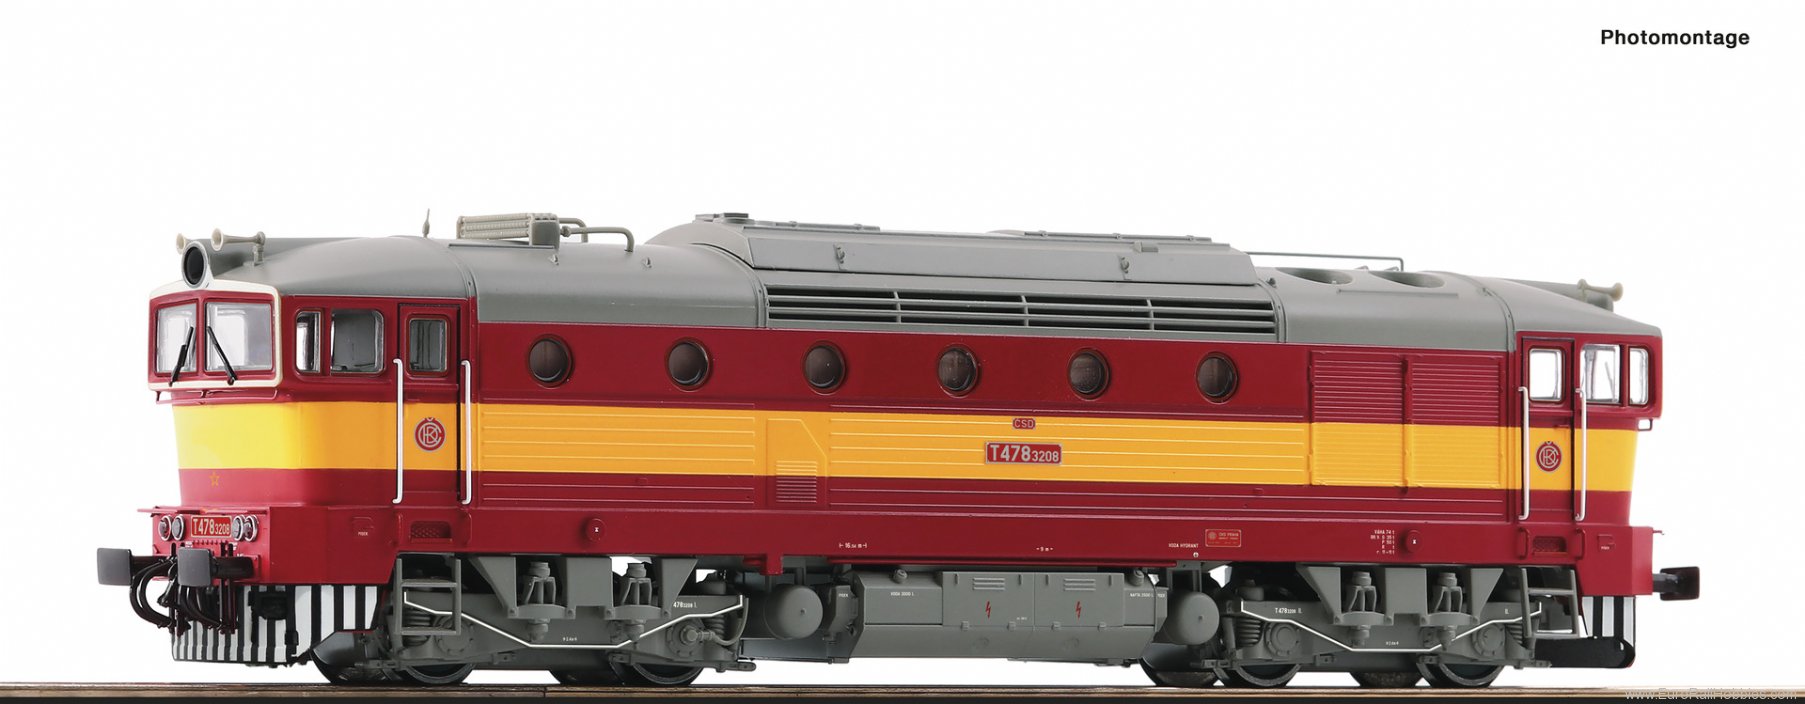 Roco 70024 Diesel locomotive T478 3208, CSD (Digital Sou